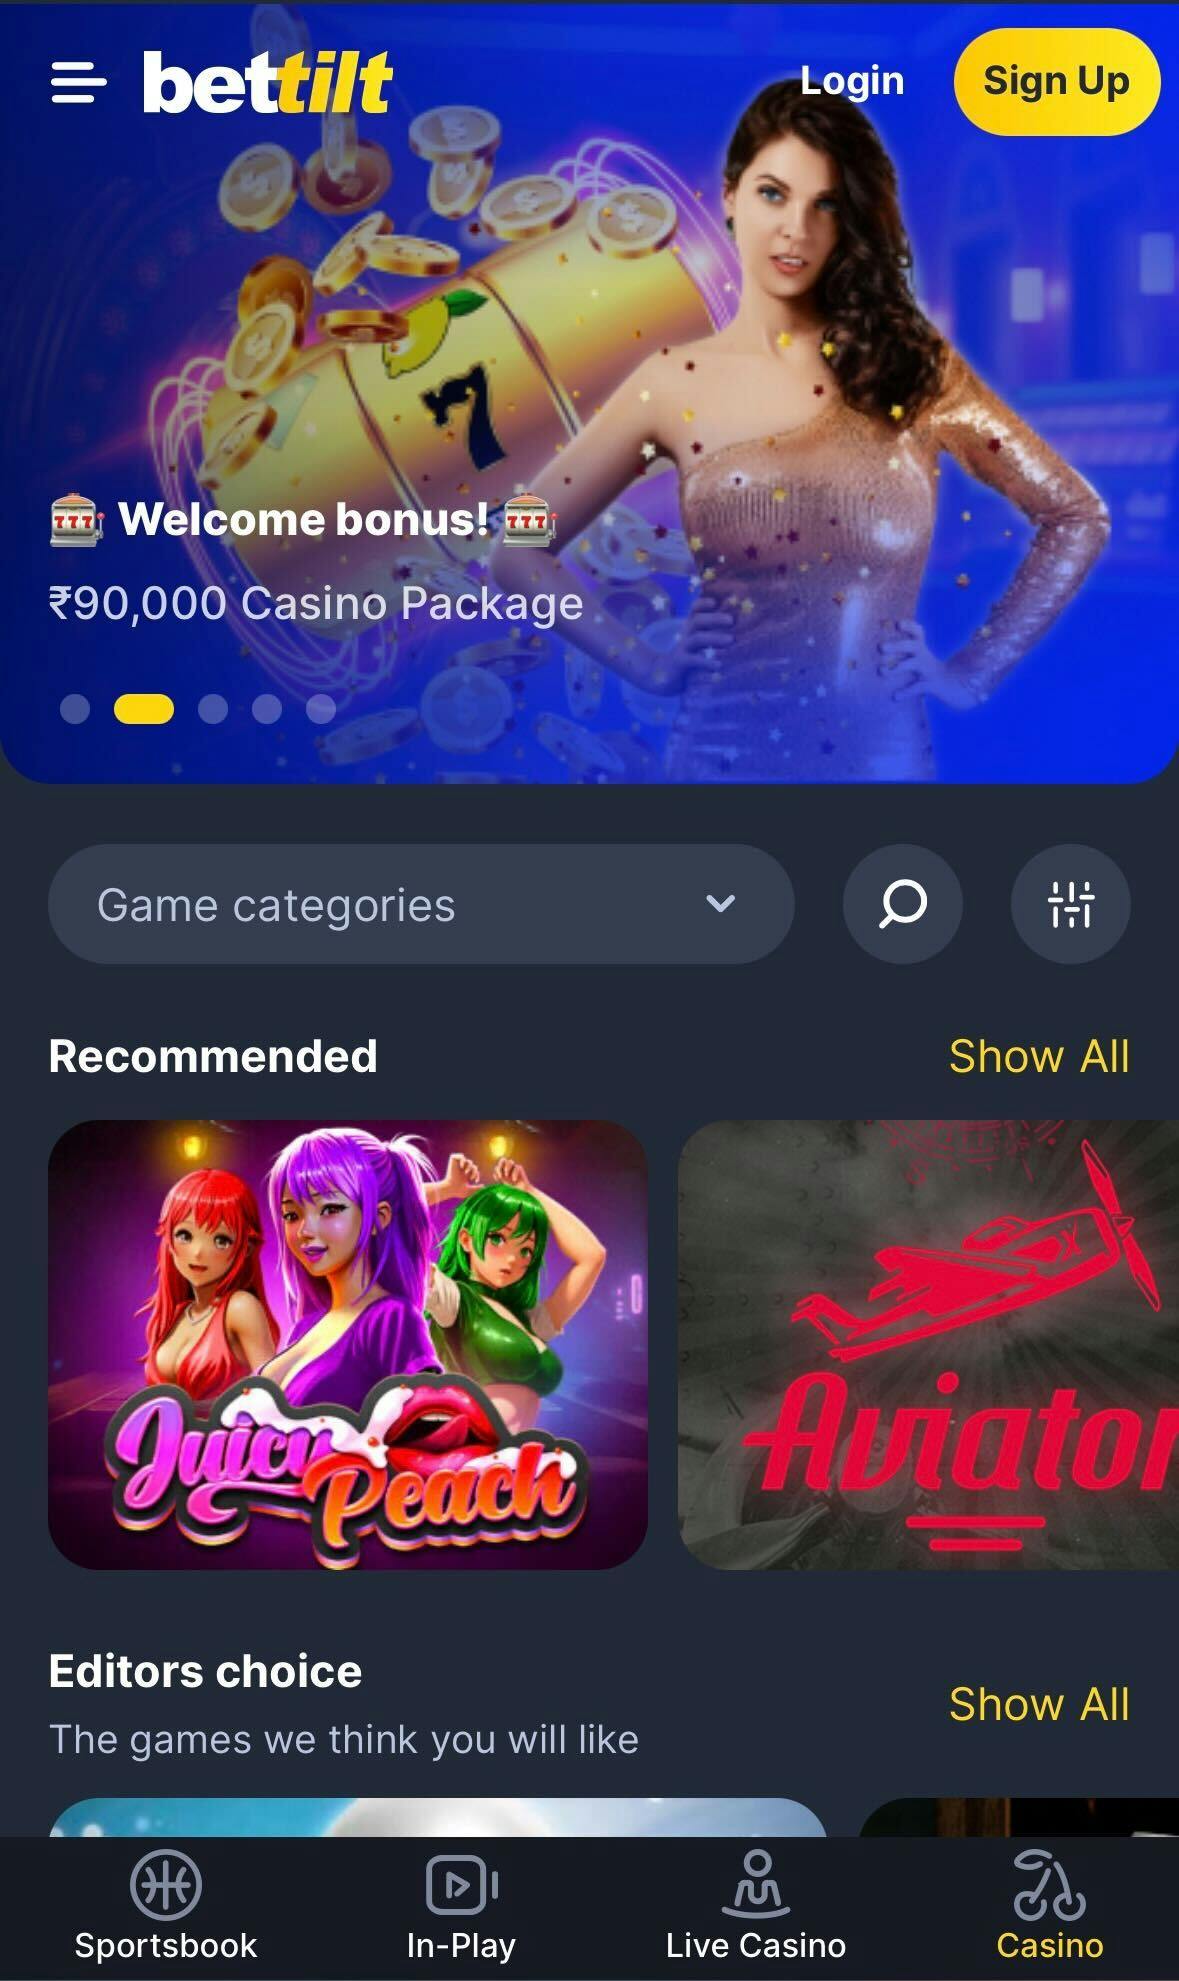 Bettilt app casino welcome bonus package and Aviator game